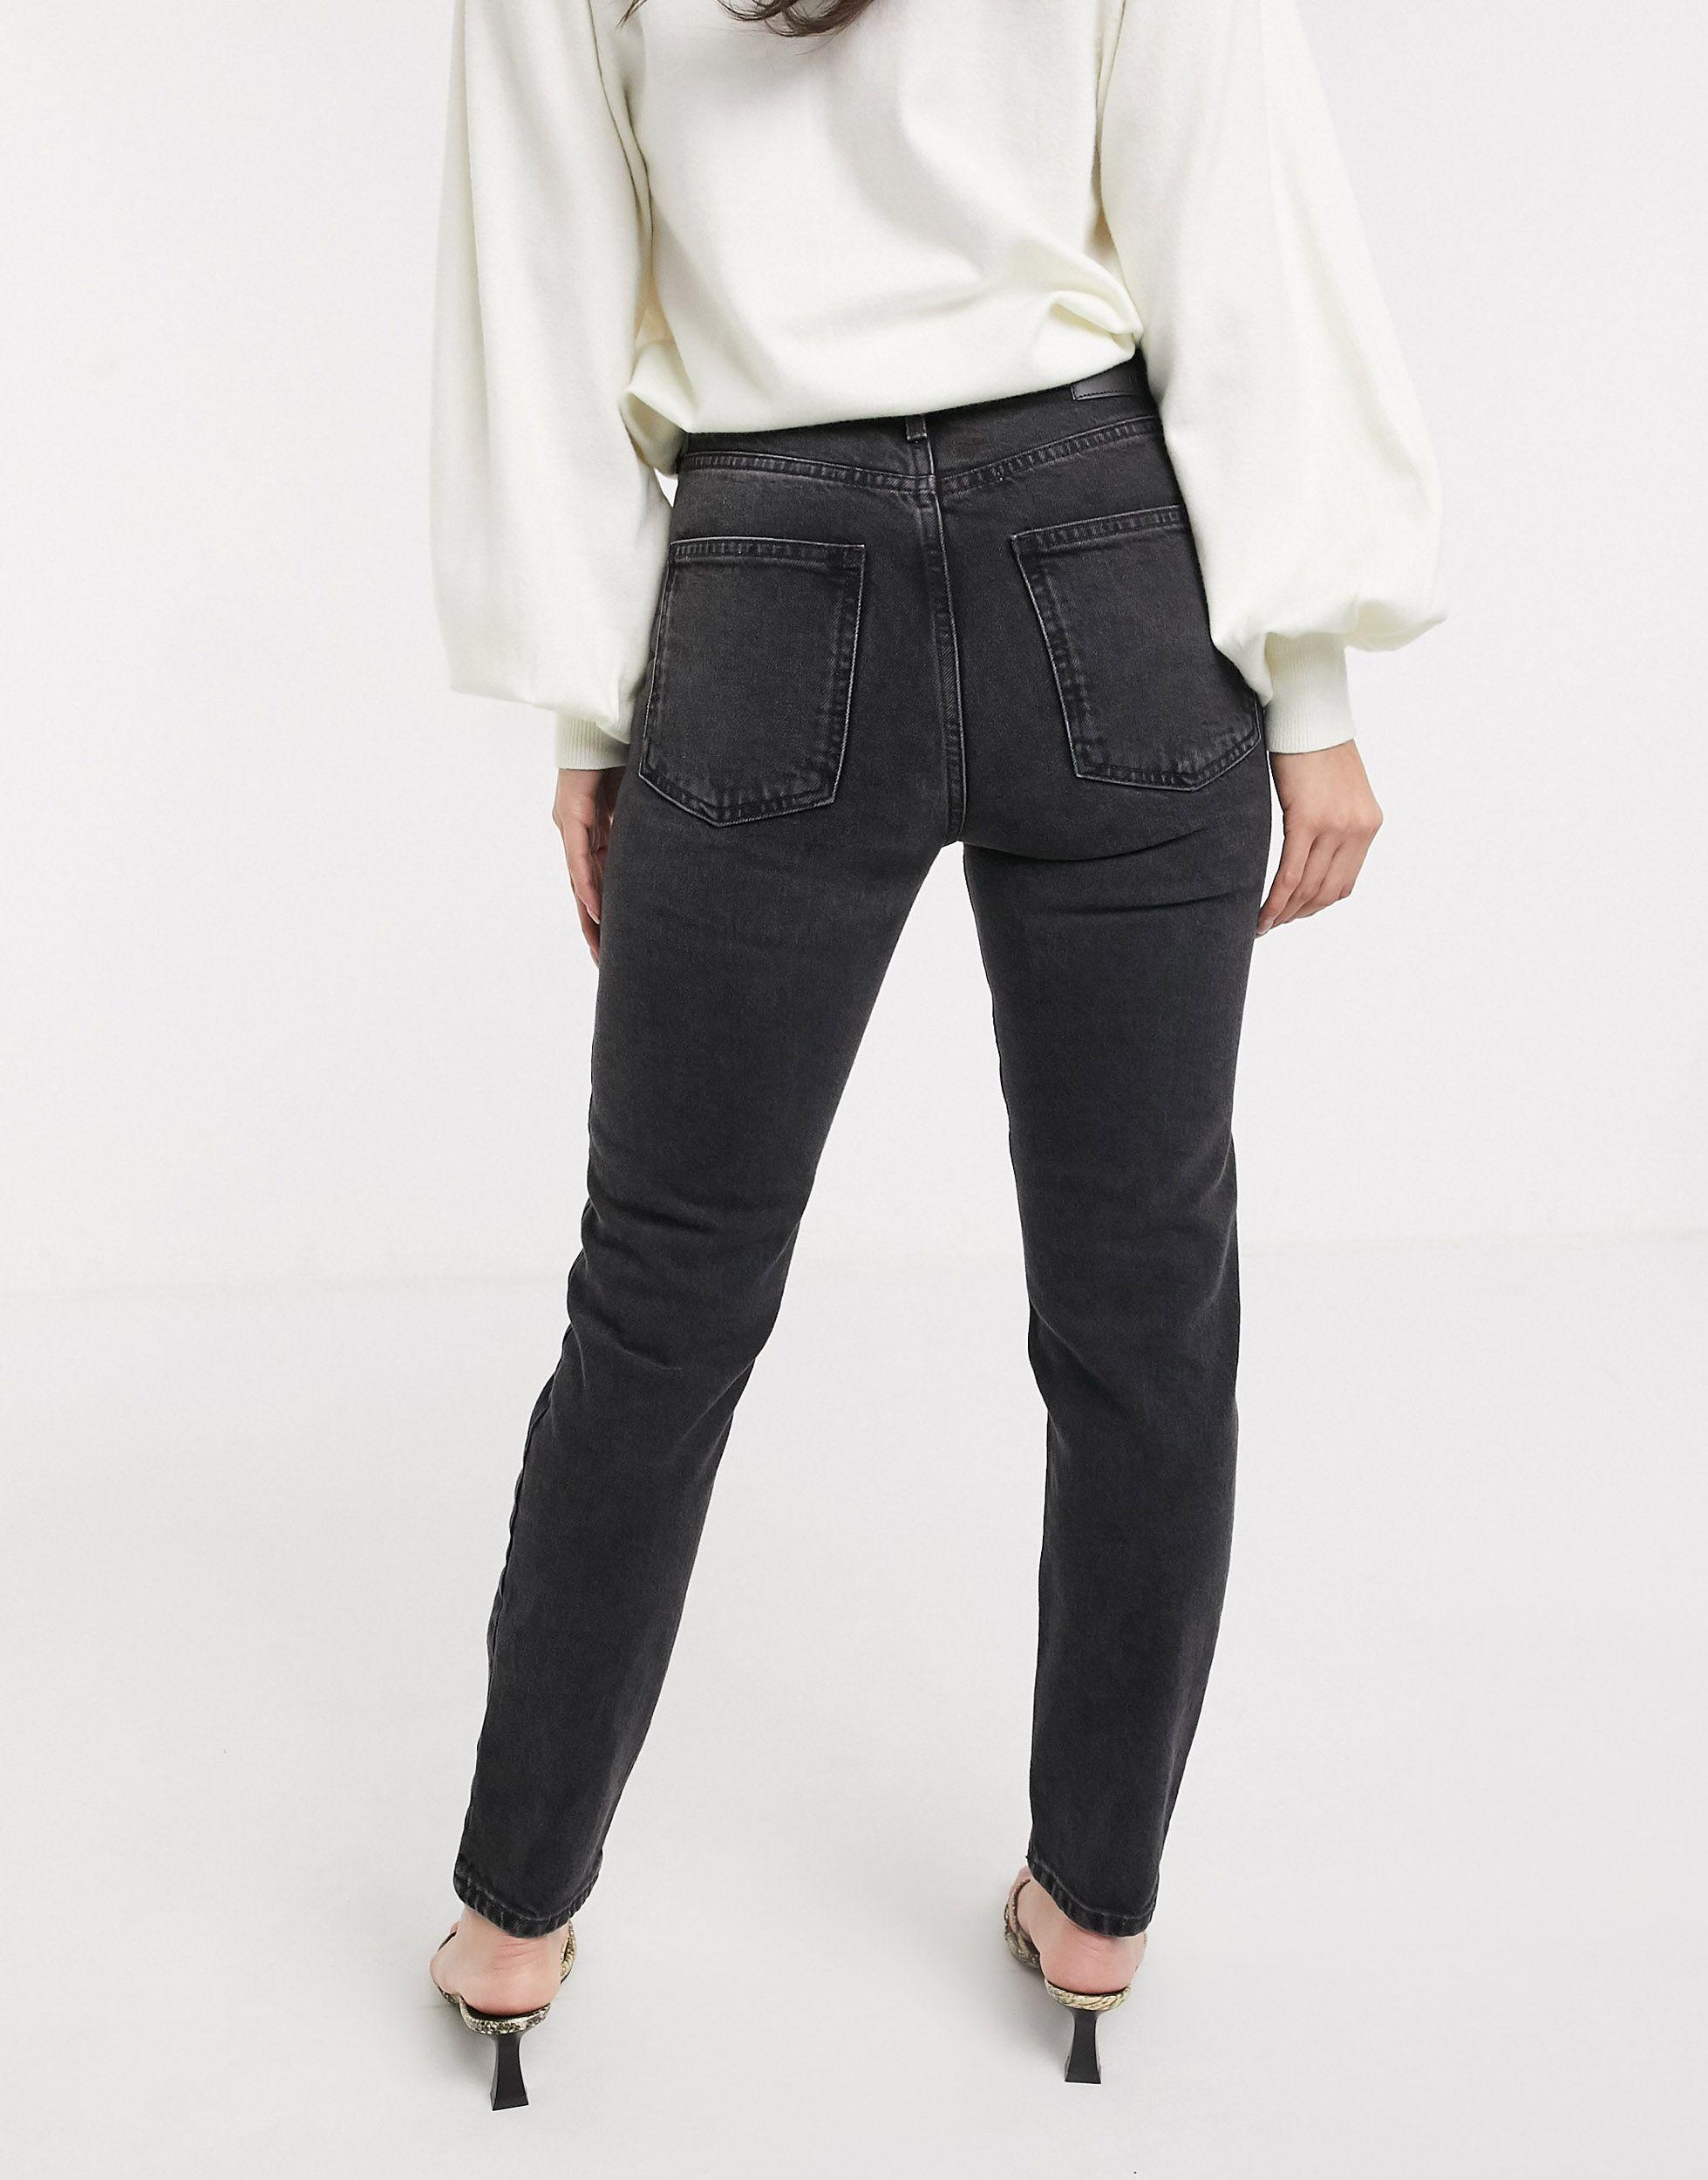 River Island Denim Original Slim Fit Jeans in Black - Lyst